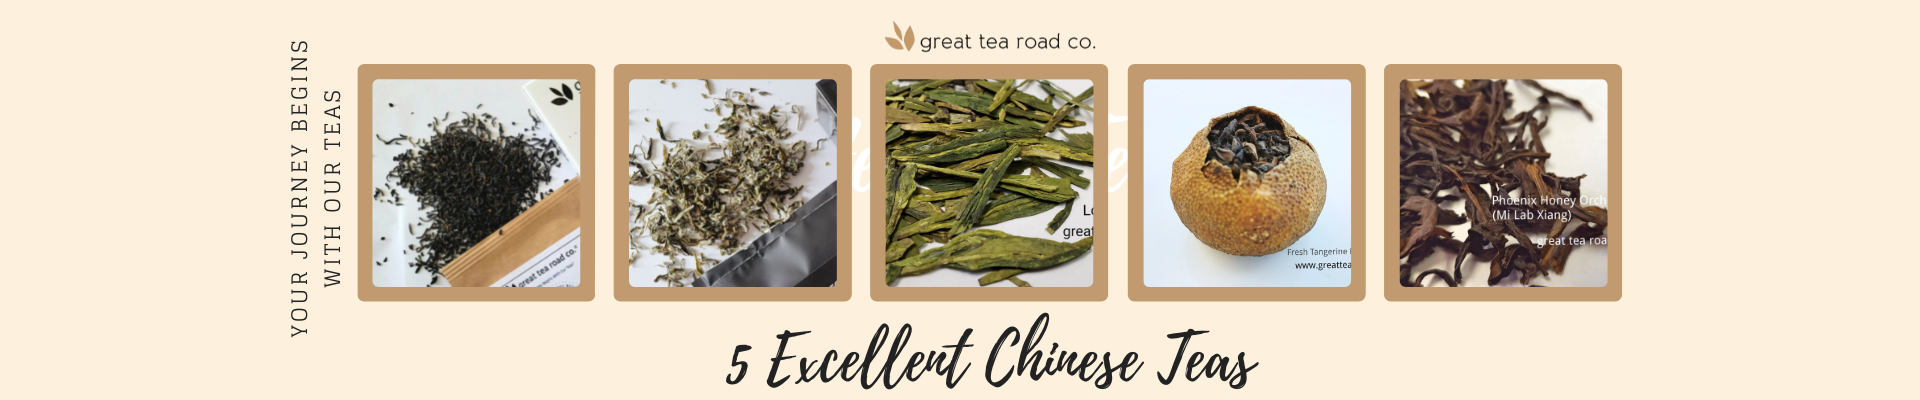 great tea, chinese tea, keemun, black tea, bi luo chun, green tea, long jing, oolong, puerh, loose leaf tea